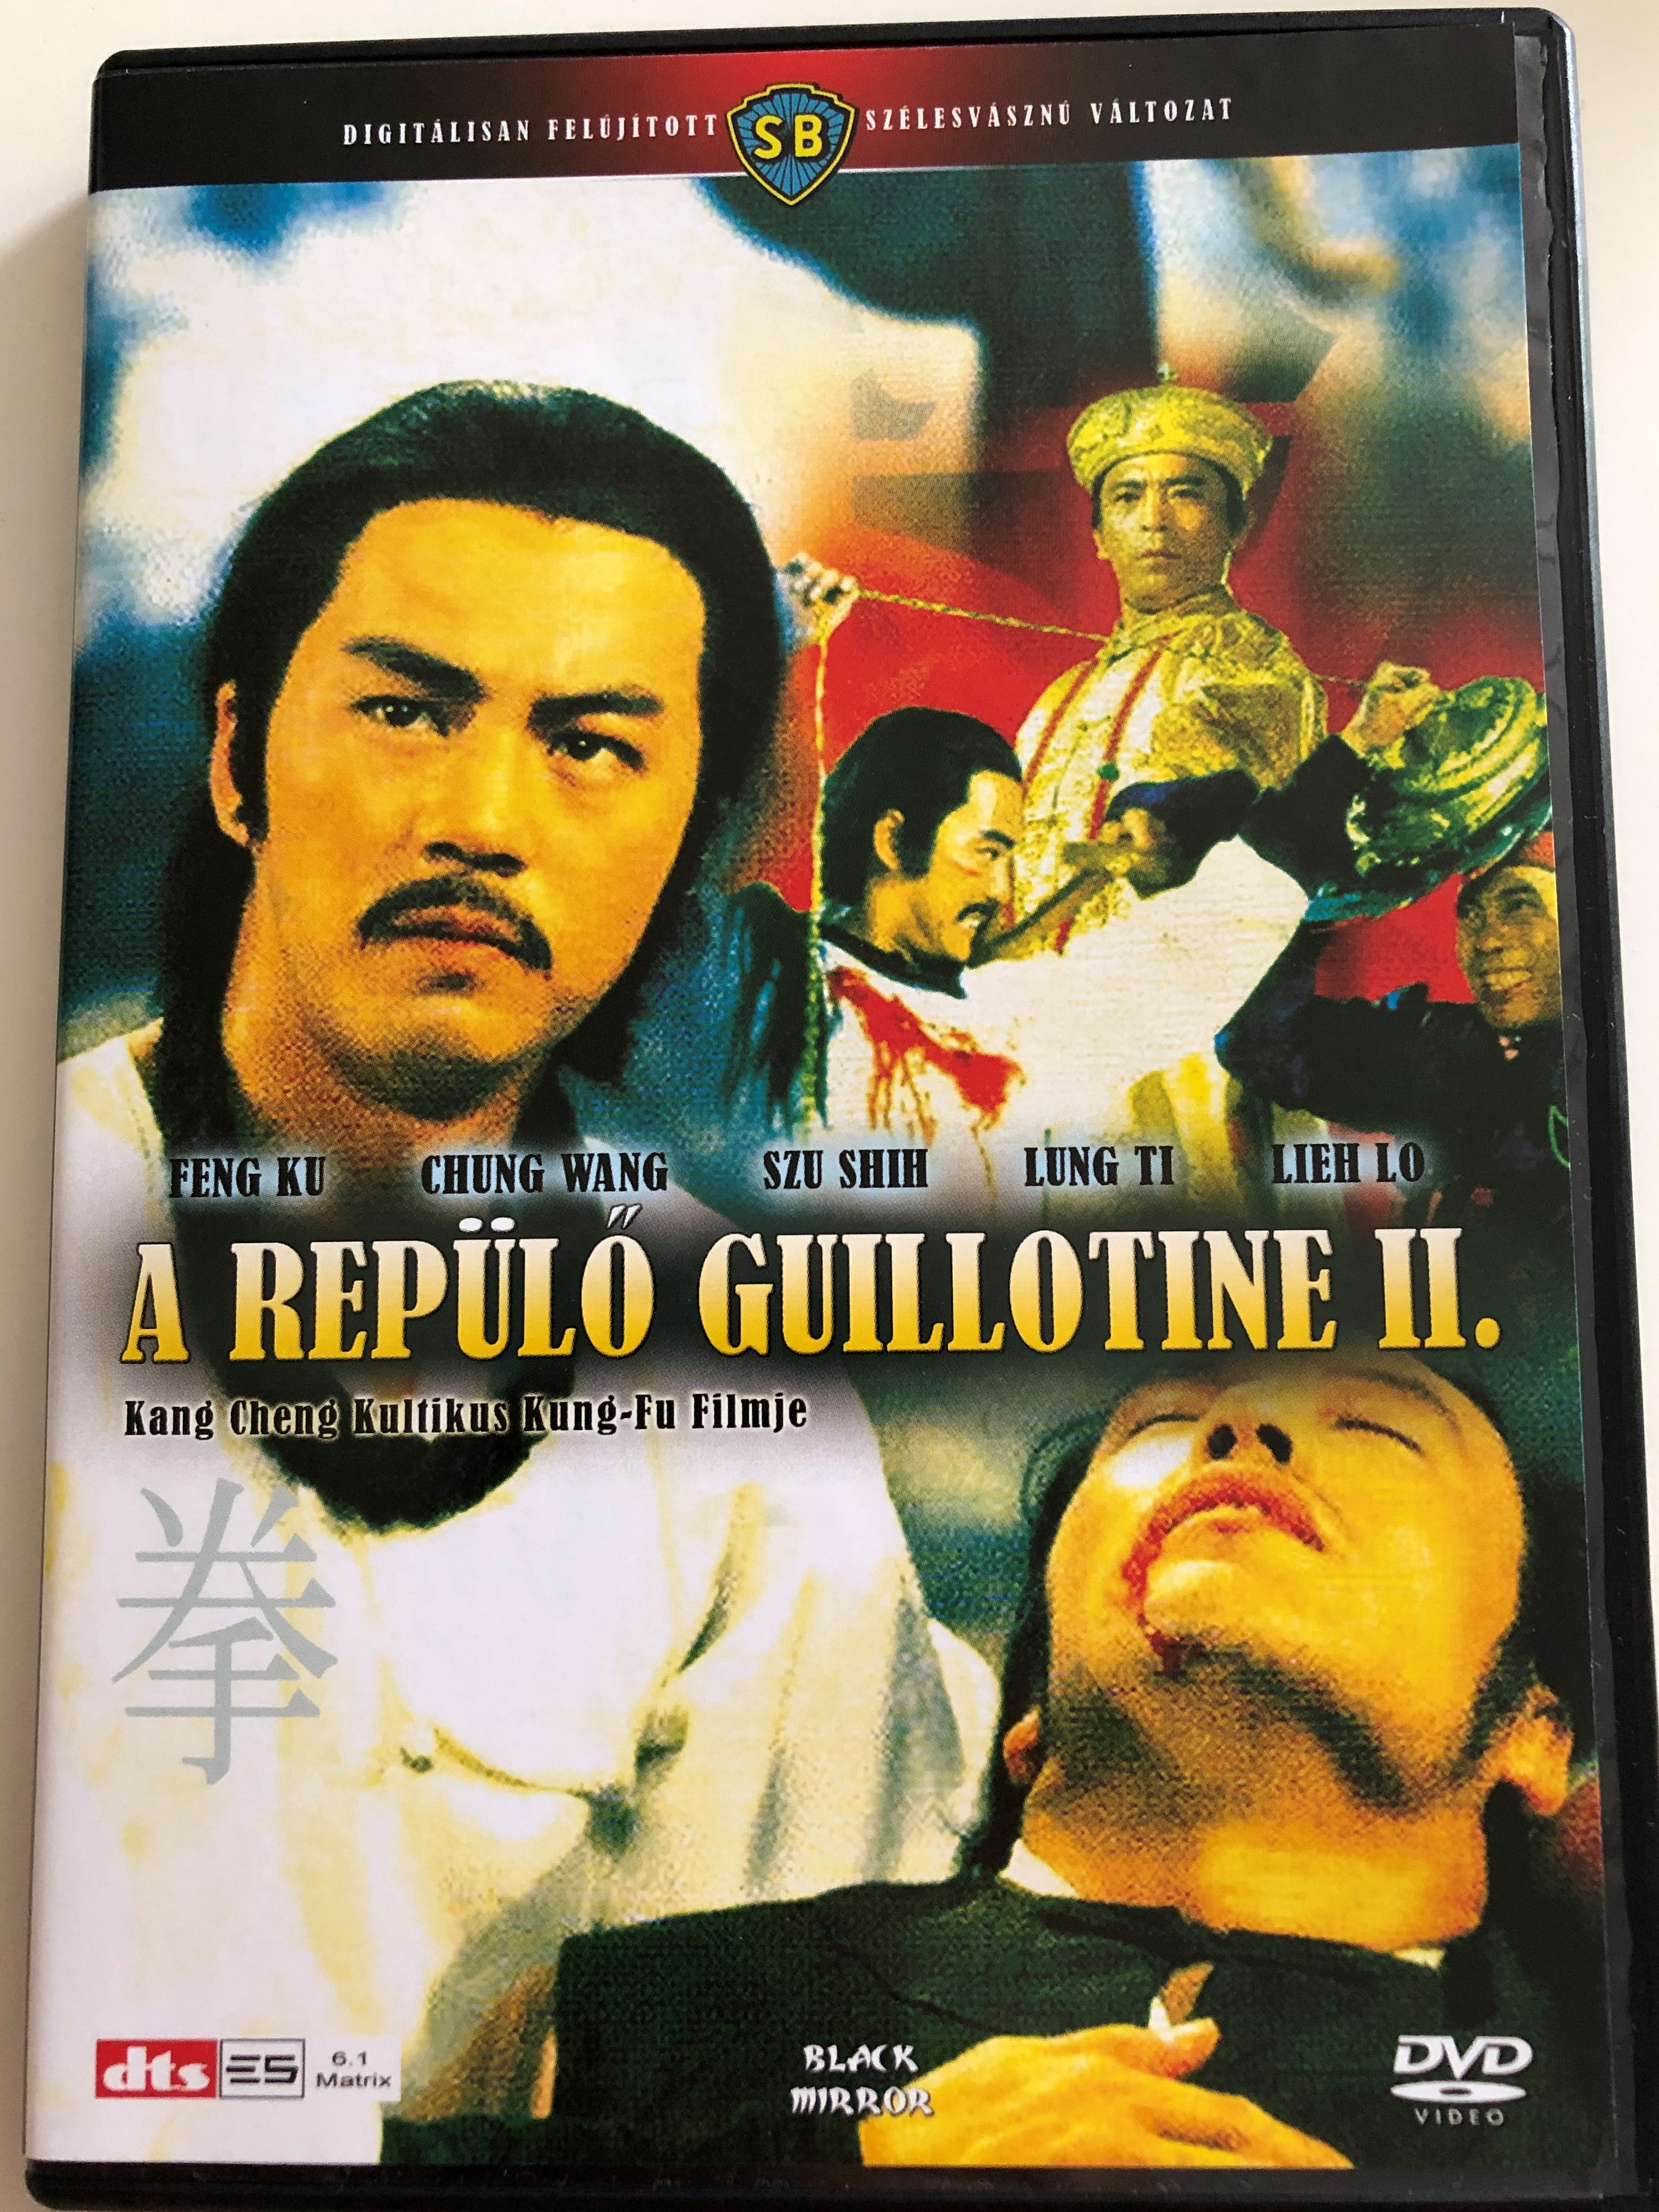 flying-guillotine-2-dvd-1977-a-rep-l-guillotine-2-directed-by-cheng-kang-hua-shan-starring-ku-feng-wang-chung-ti-lung-yen-nan-hsi-1-.jpg